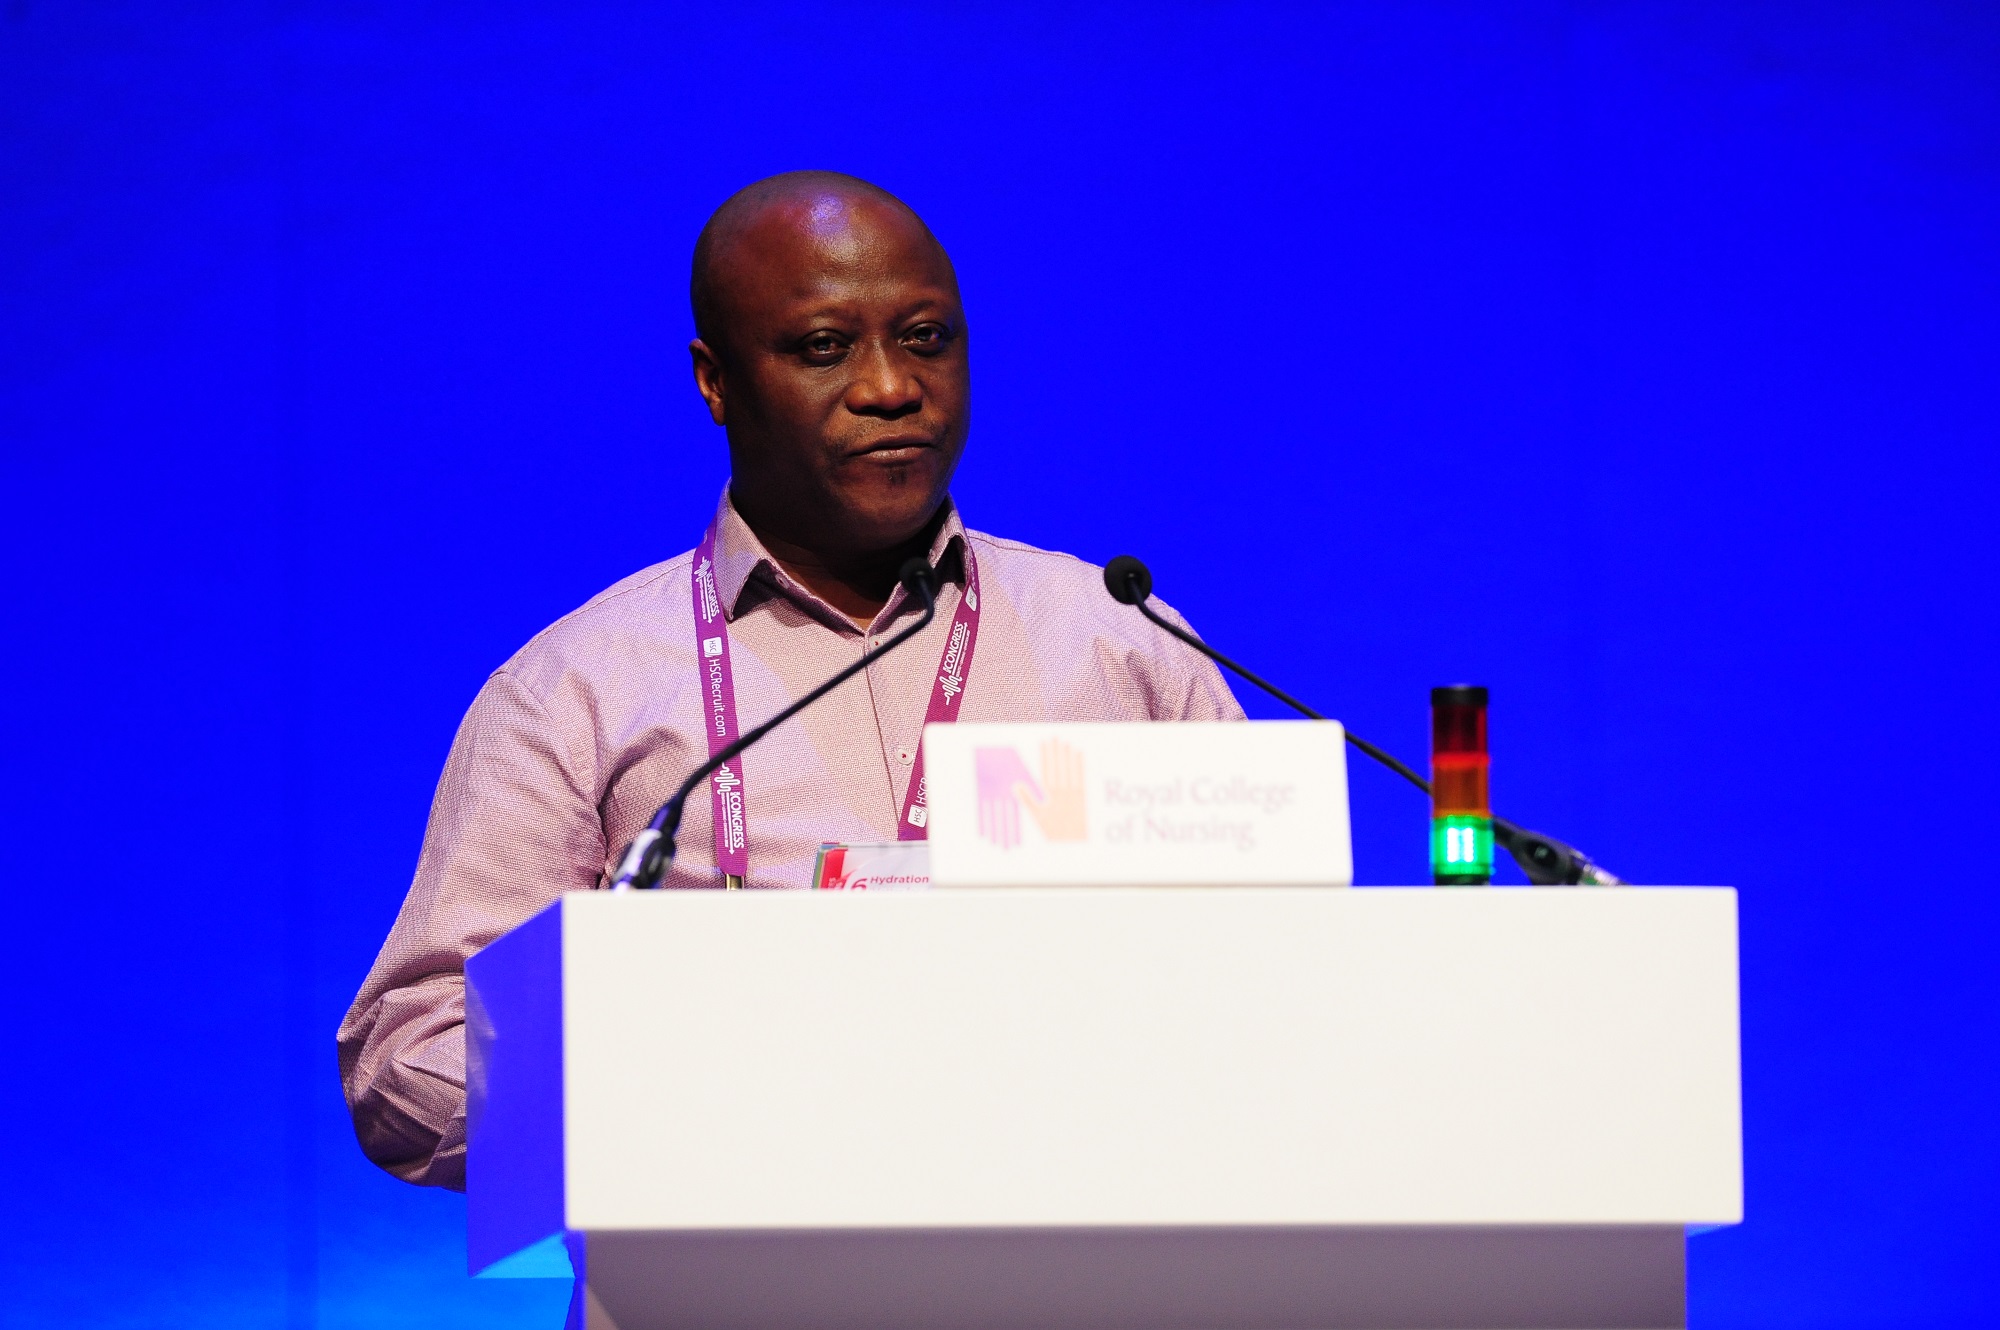 Monsuru Odekunle speaking at the podium